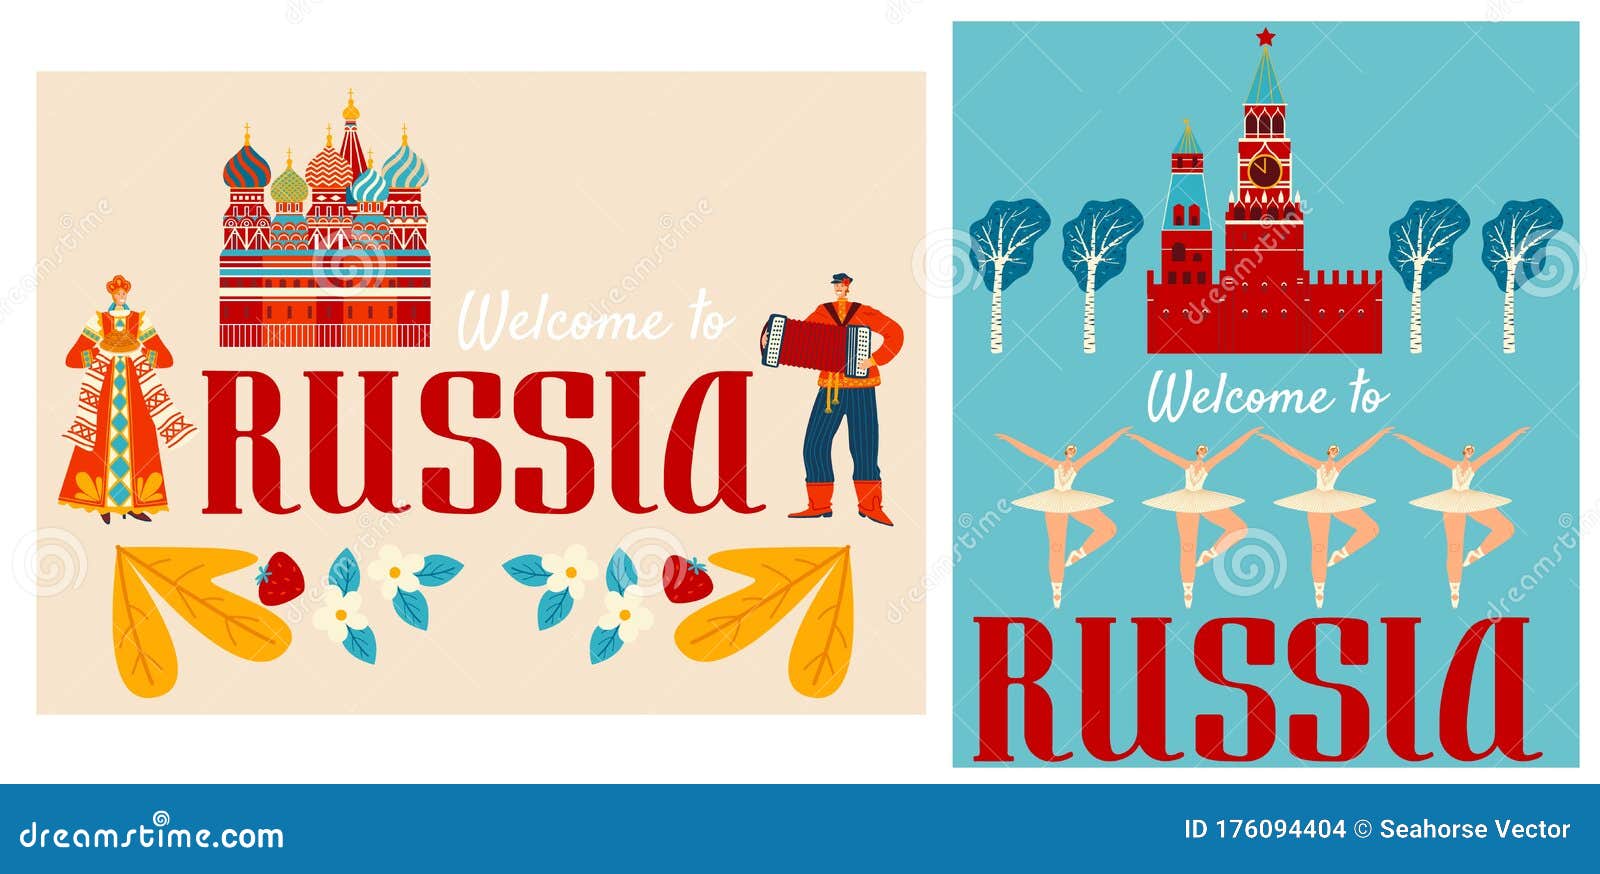 russia tourism slogan